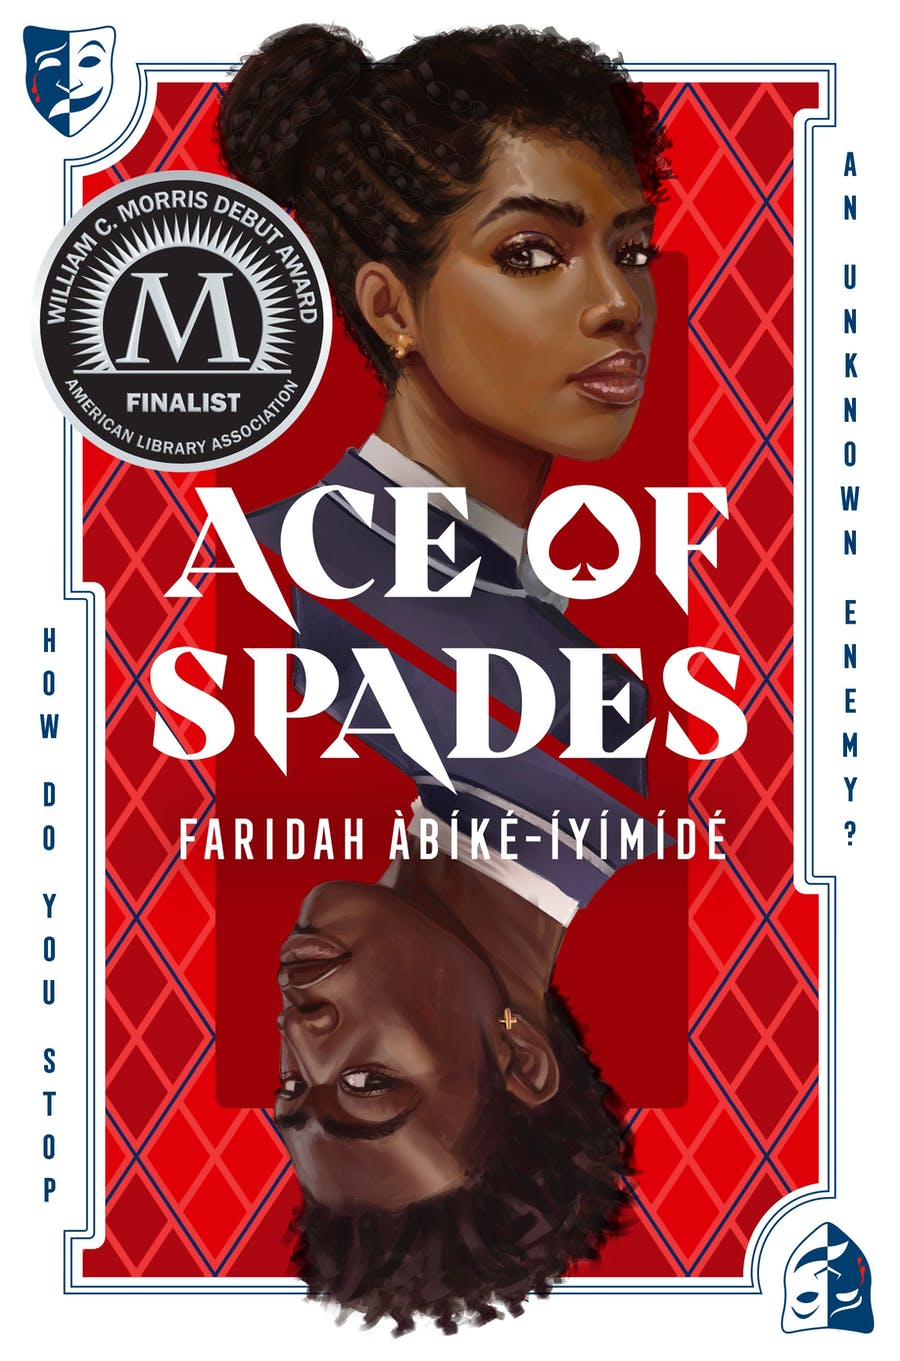 Ace of Spades | Faridah Abike-Iyimide image0